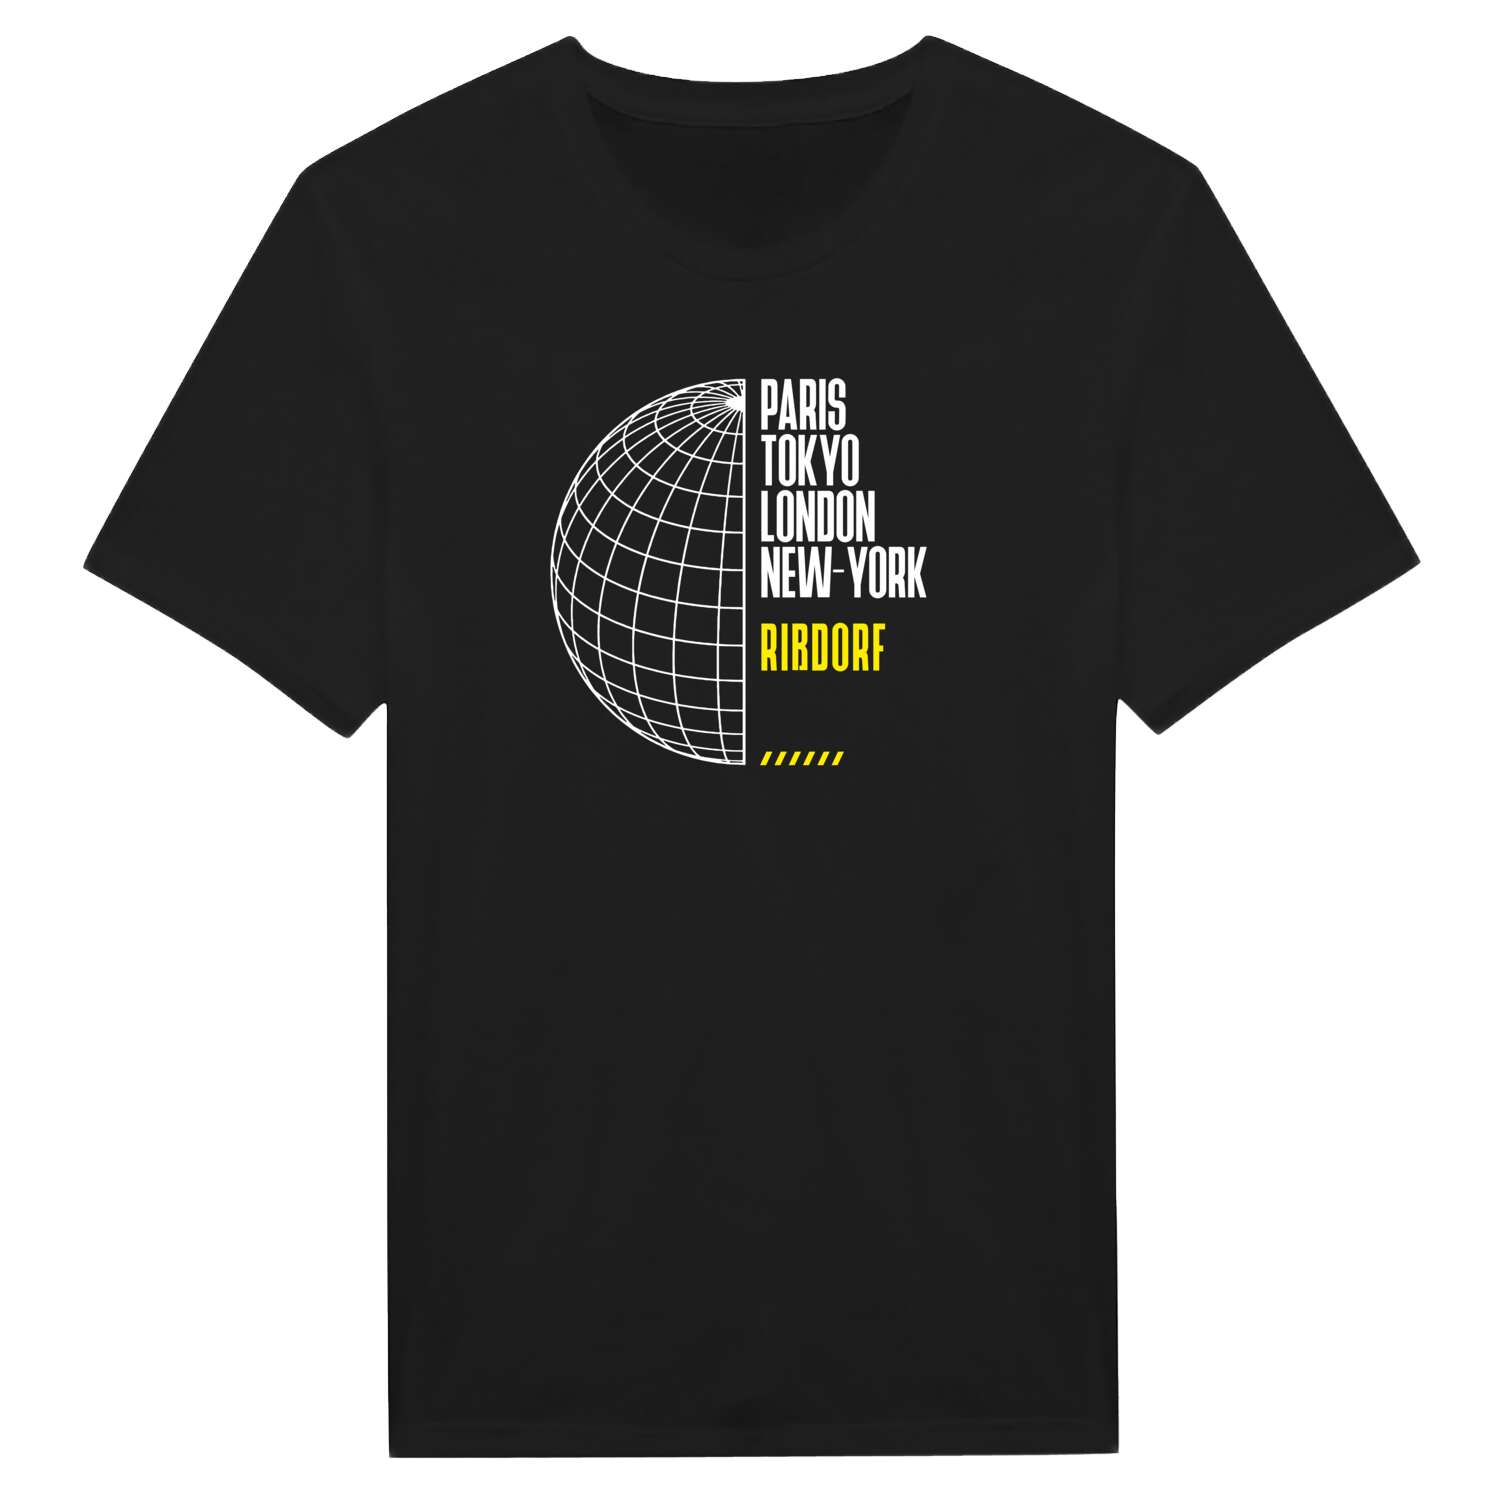 Rißdorf T-Shirt »Paris Tokyo London«